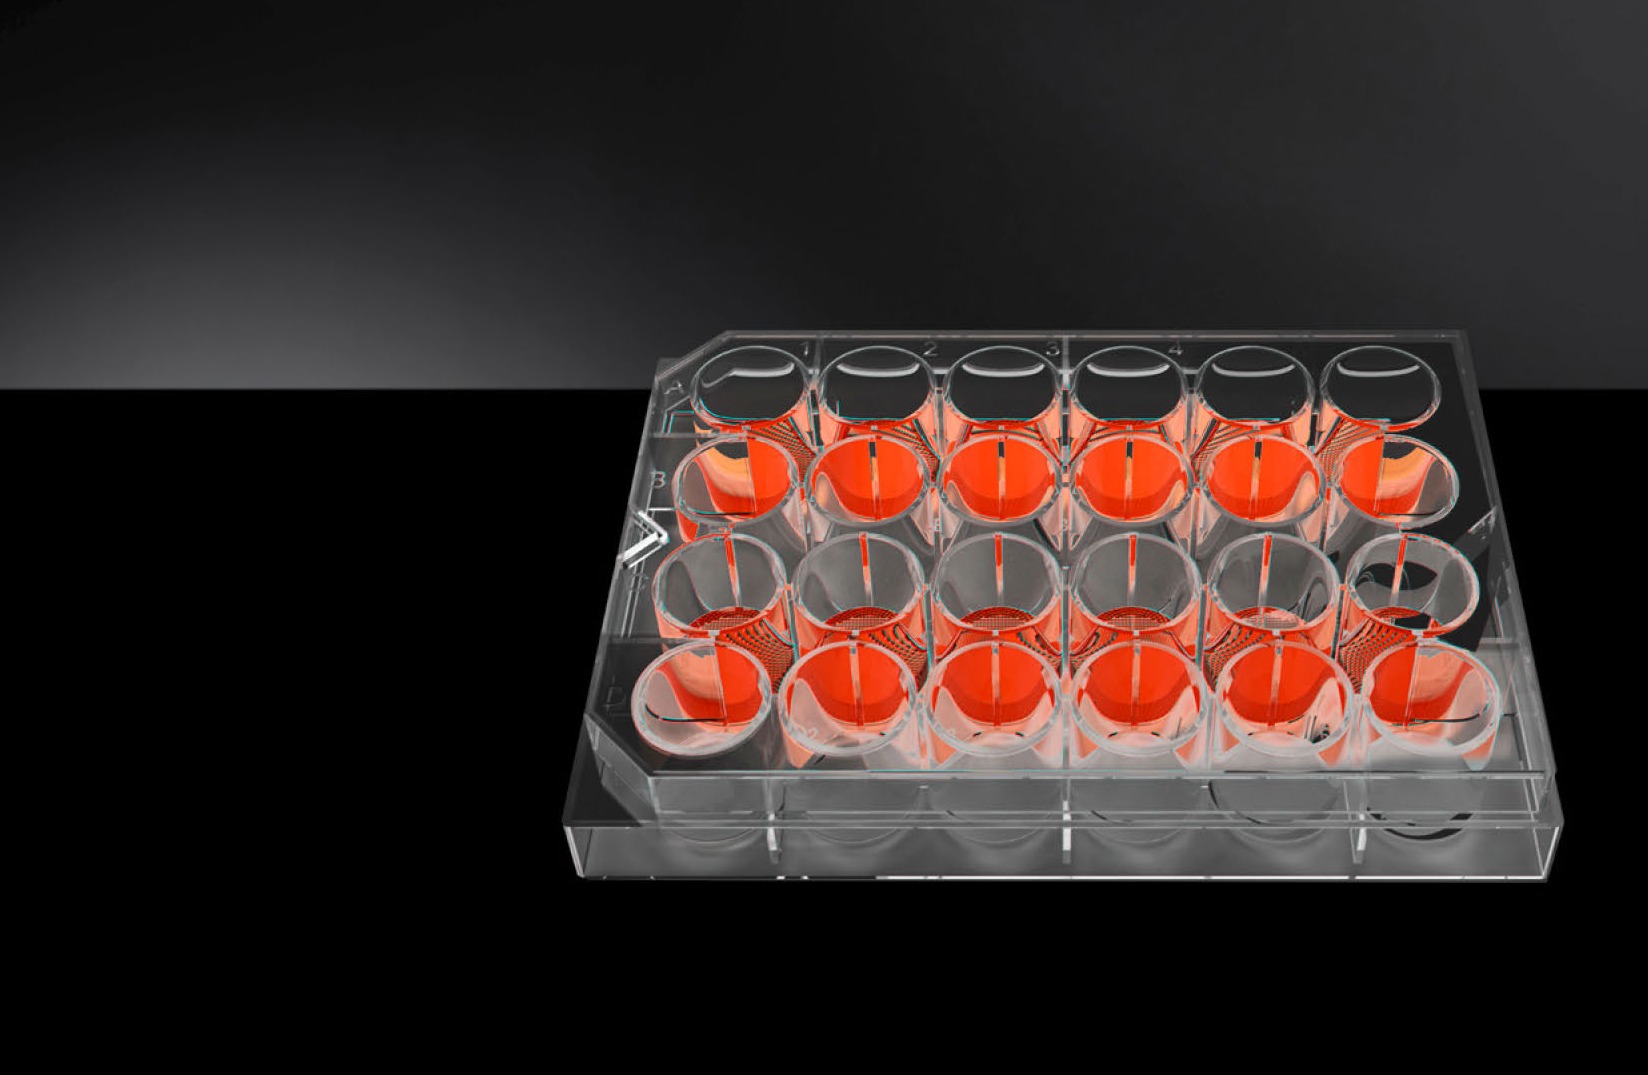 3D cell culture plates